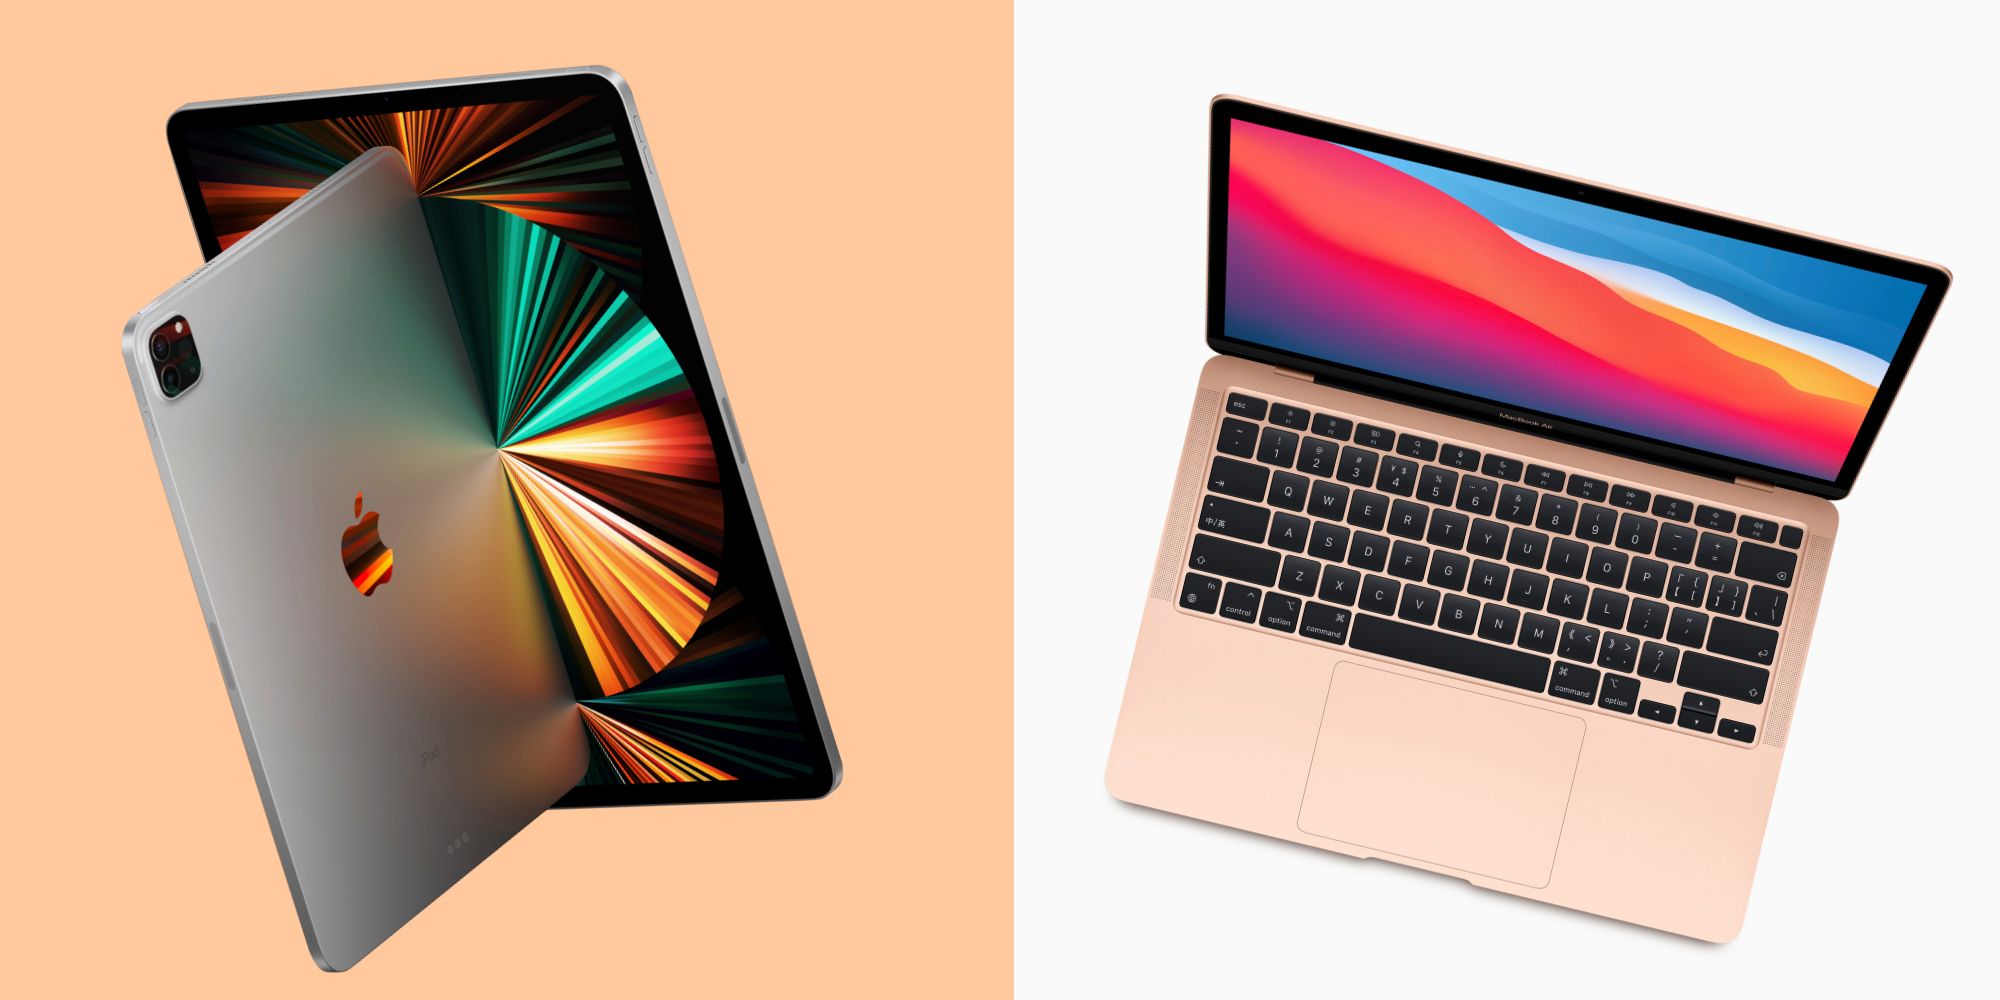 2021 iPad Pro and M1 MacBook Air